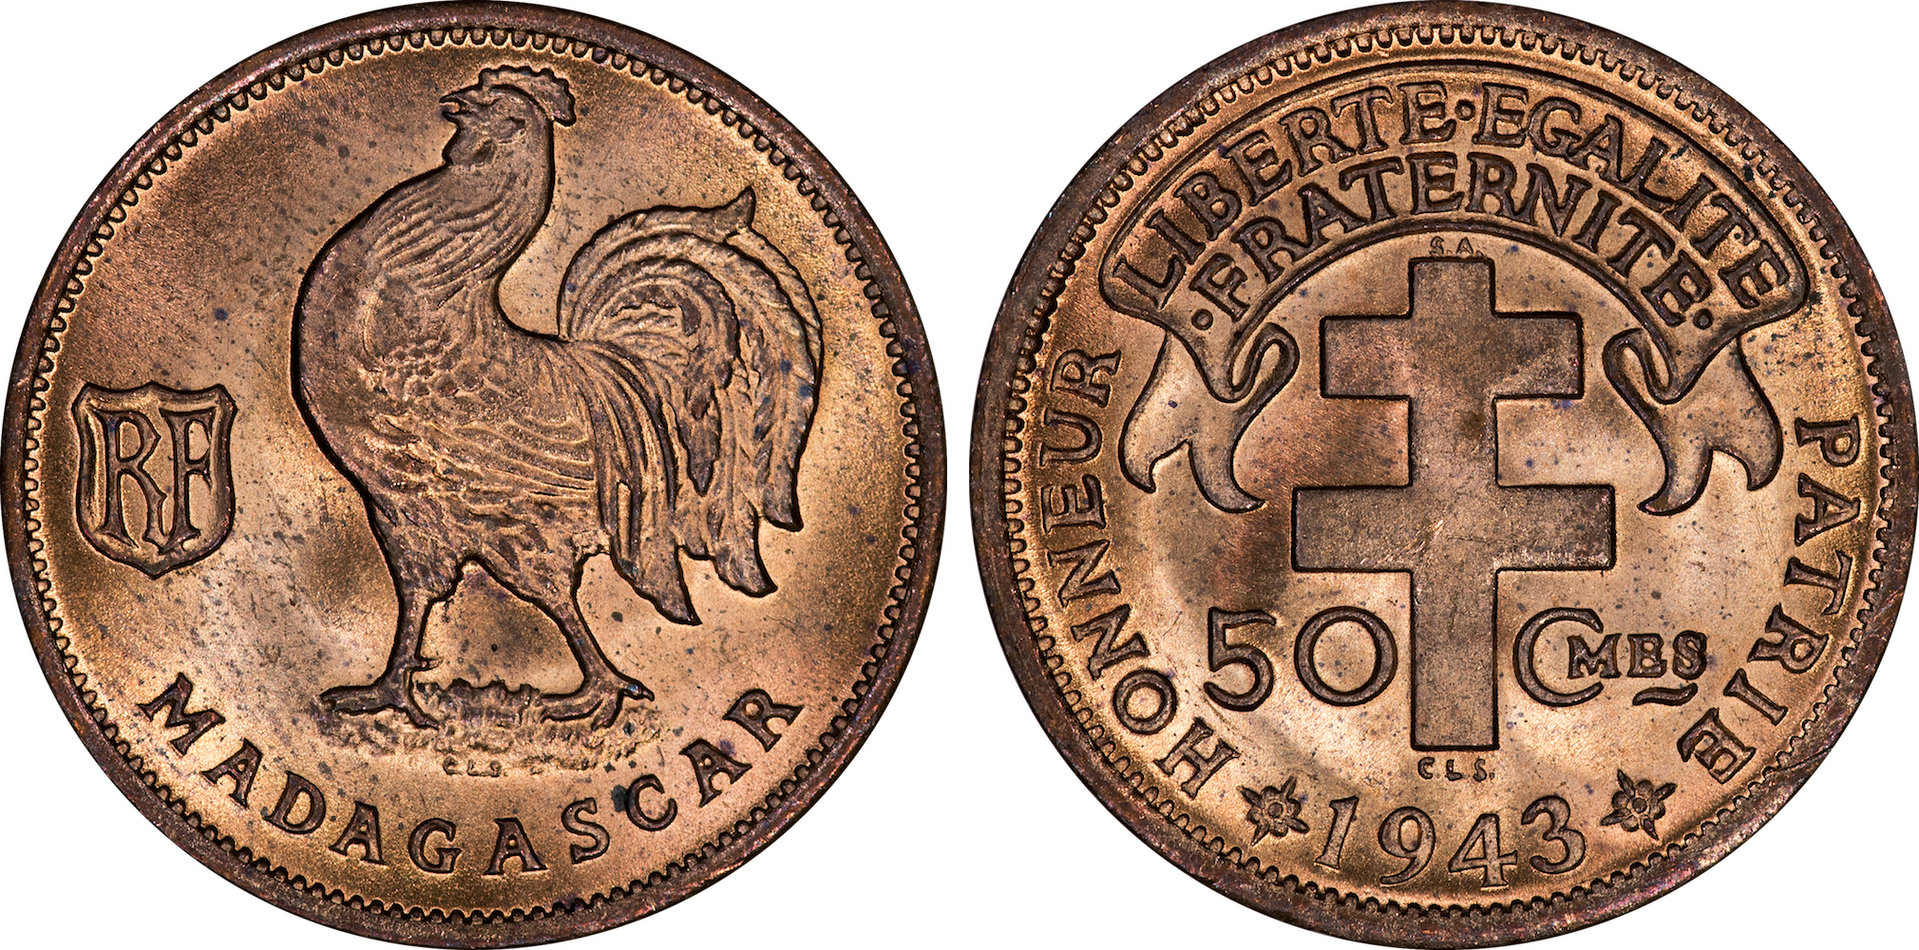 Madagascar - 1943 50 Centimes.jpg